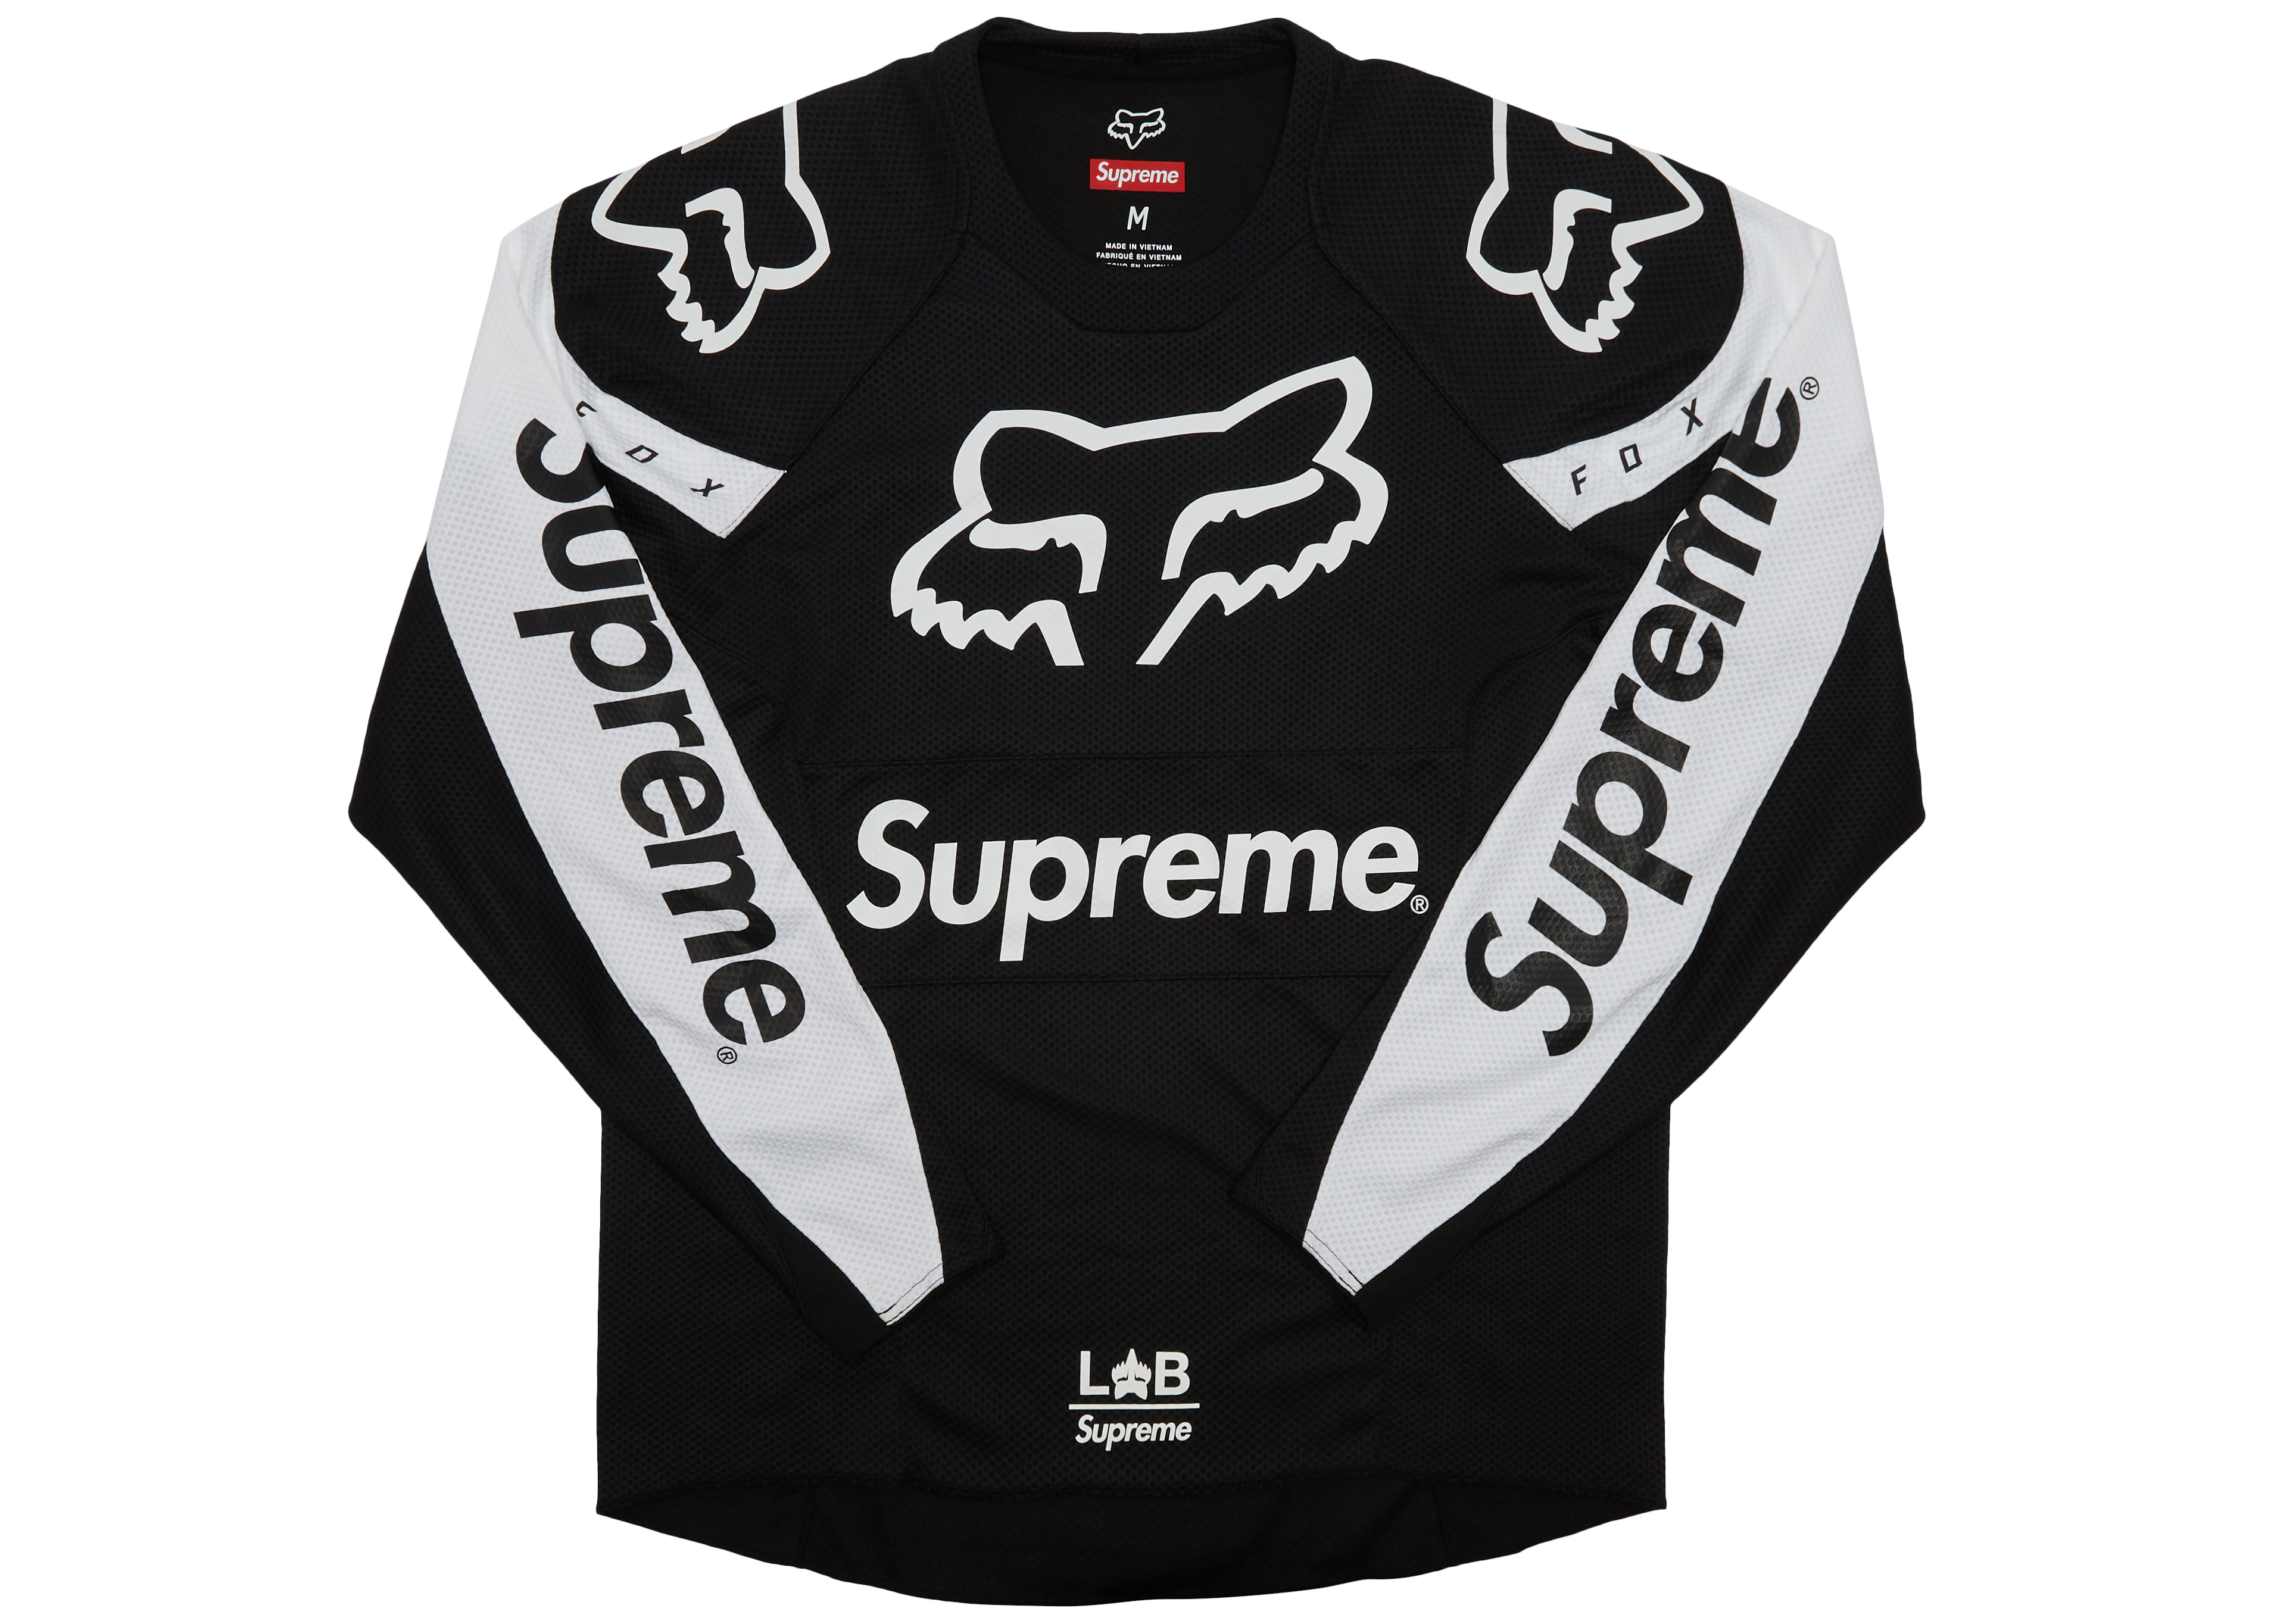 Supreme/Fox Racing Moto Jersey Top Lサイズ